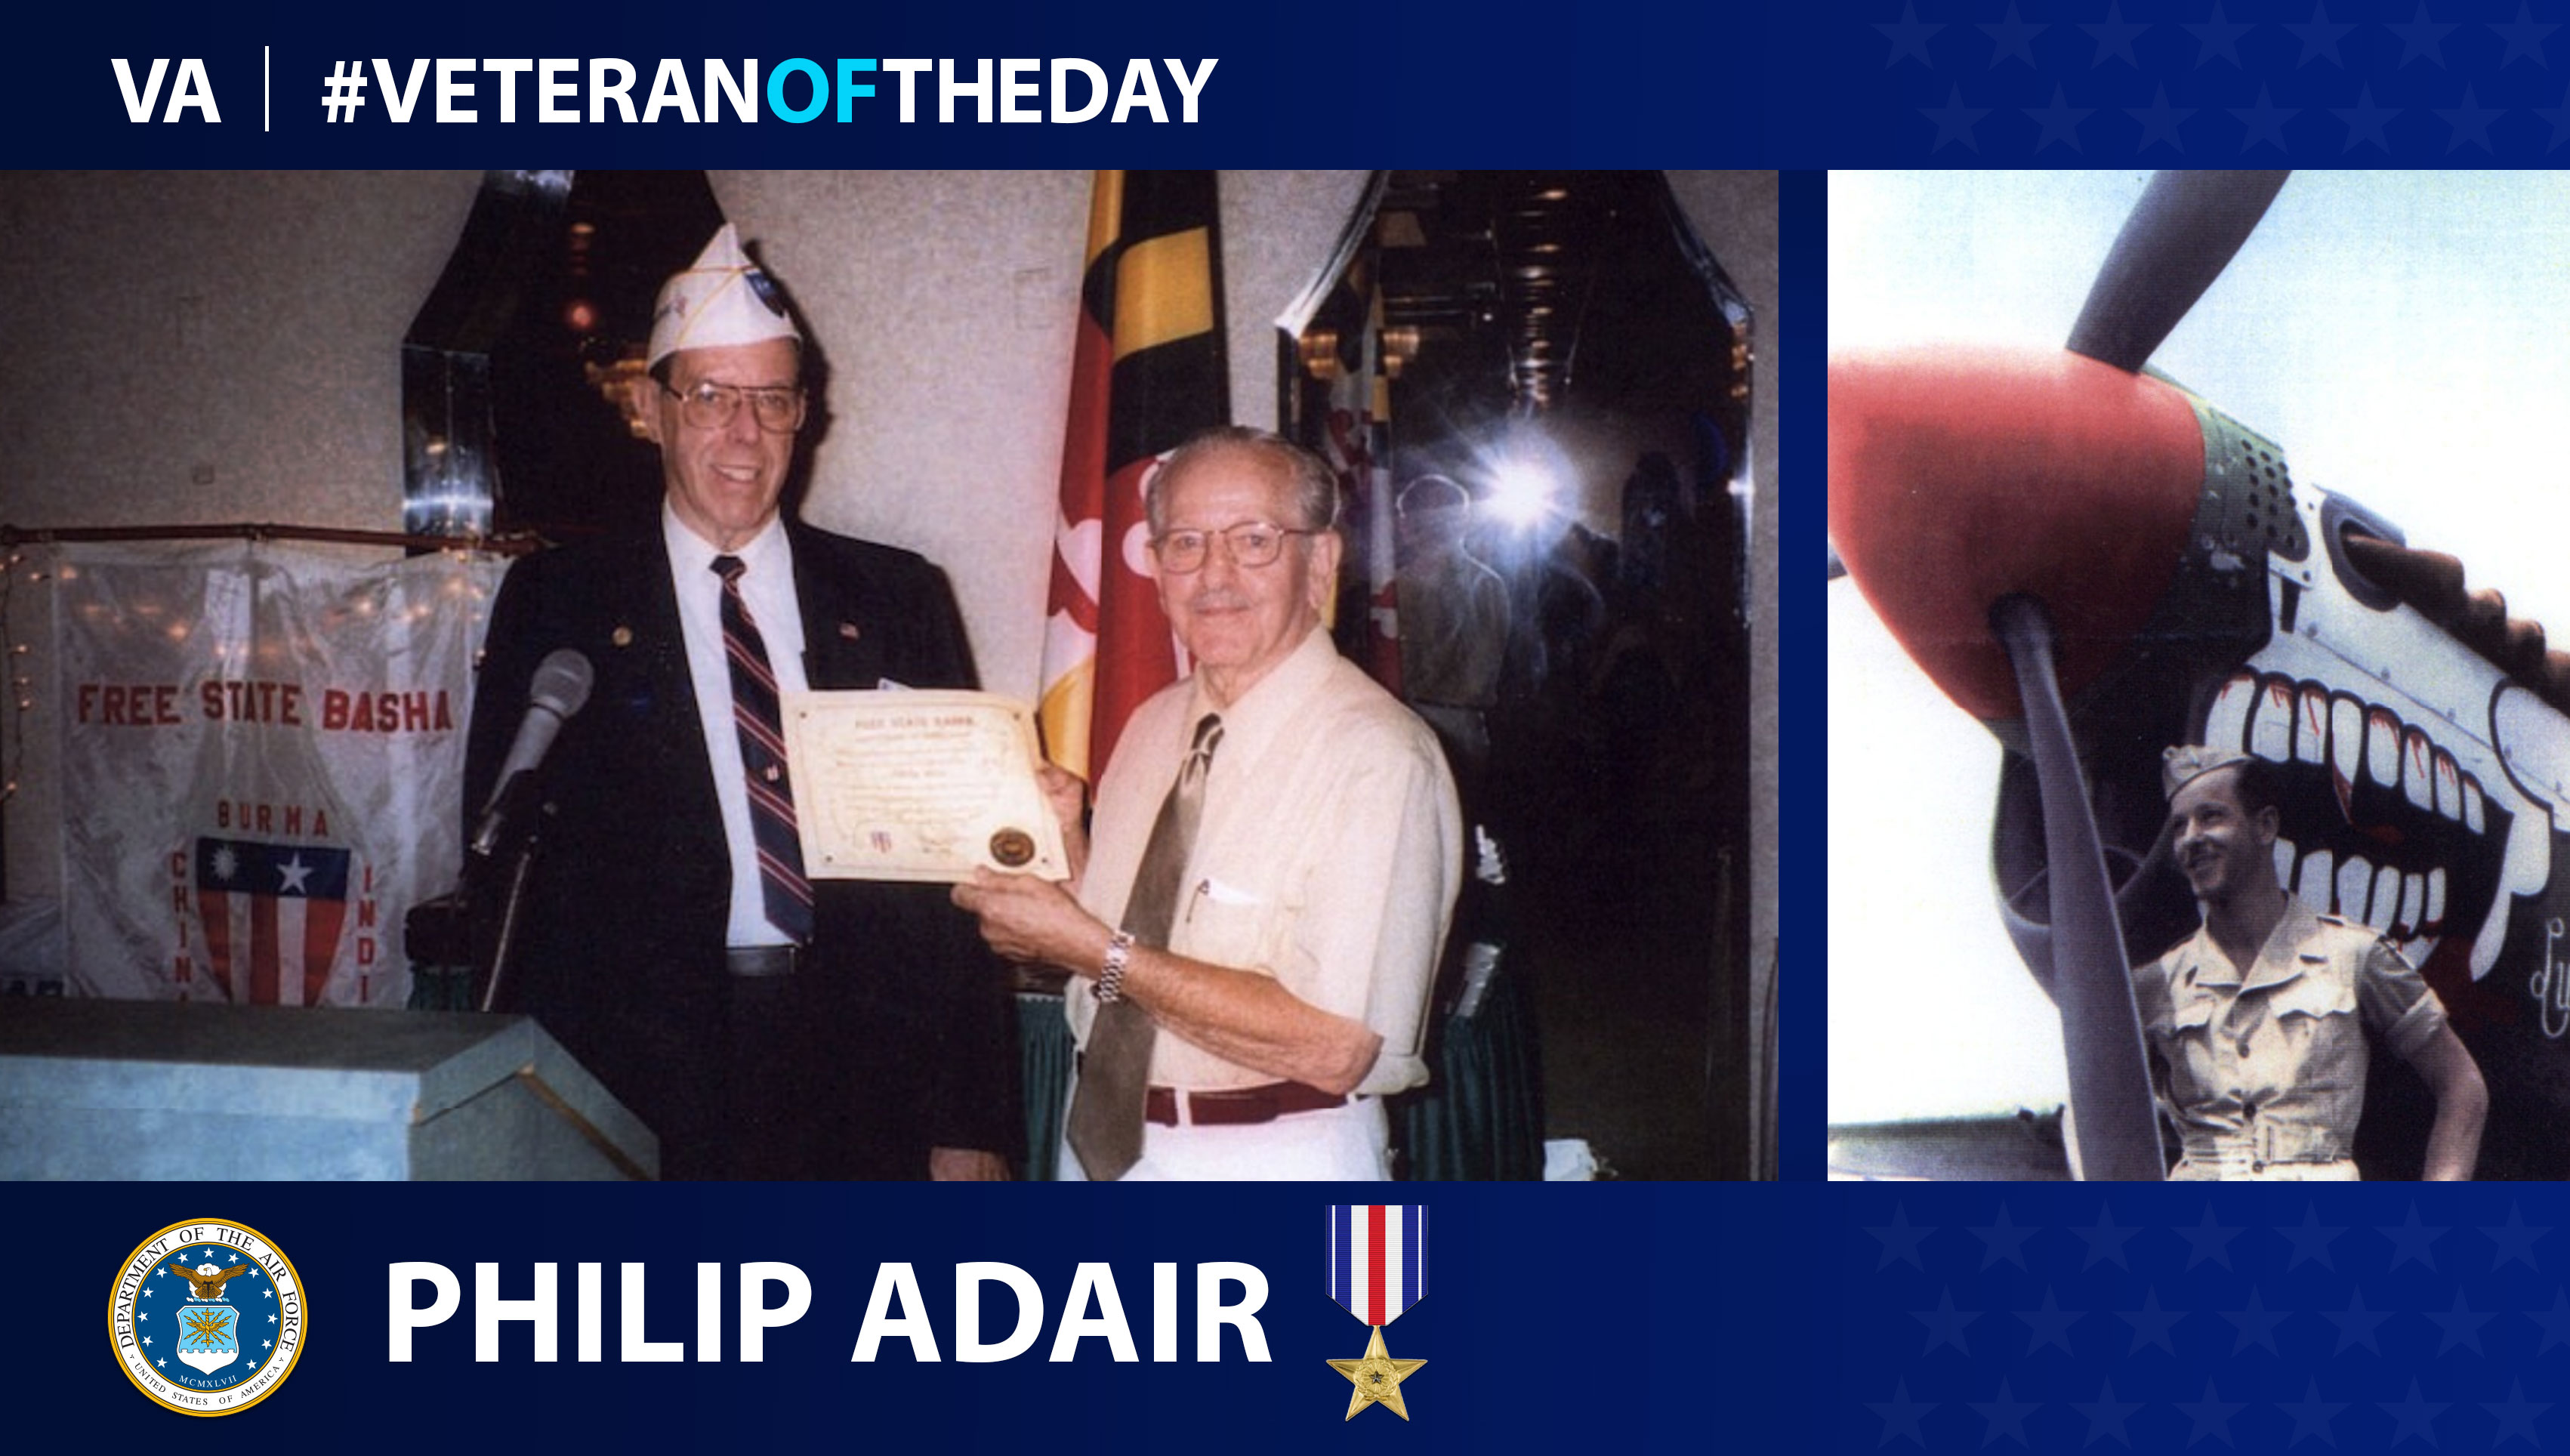 Phillip Adair is today's Veteran of the Day.